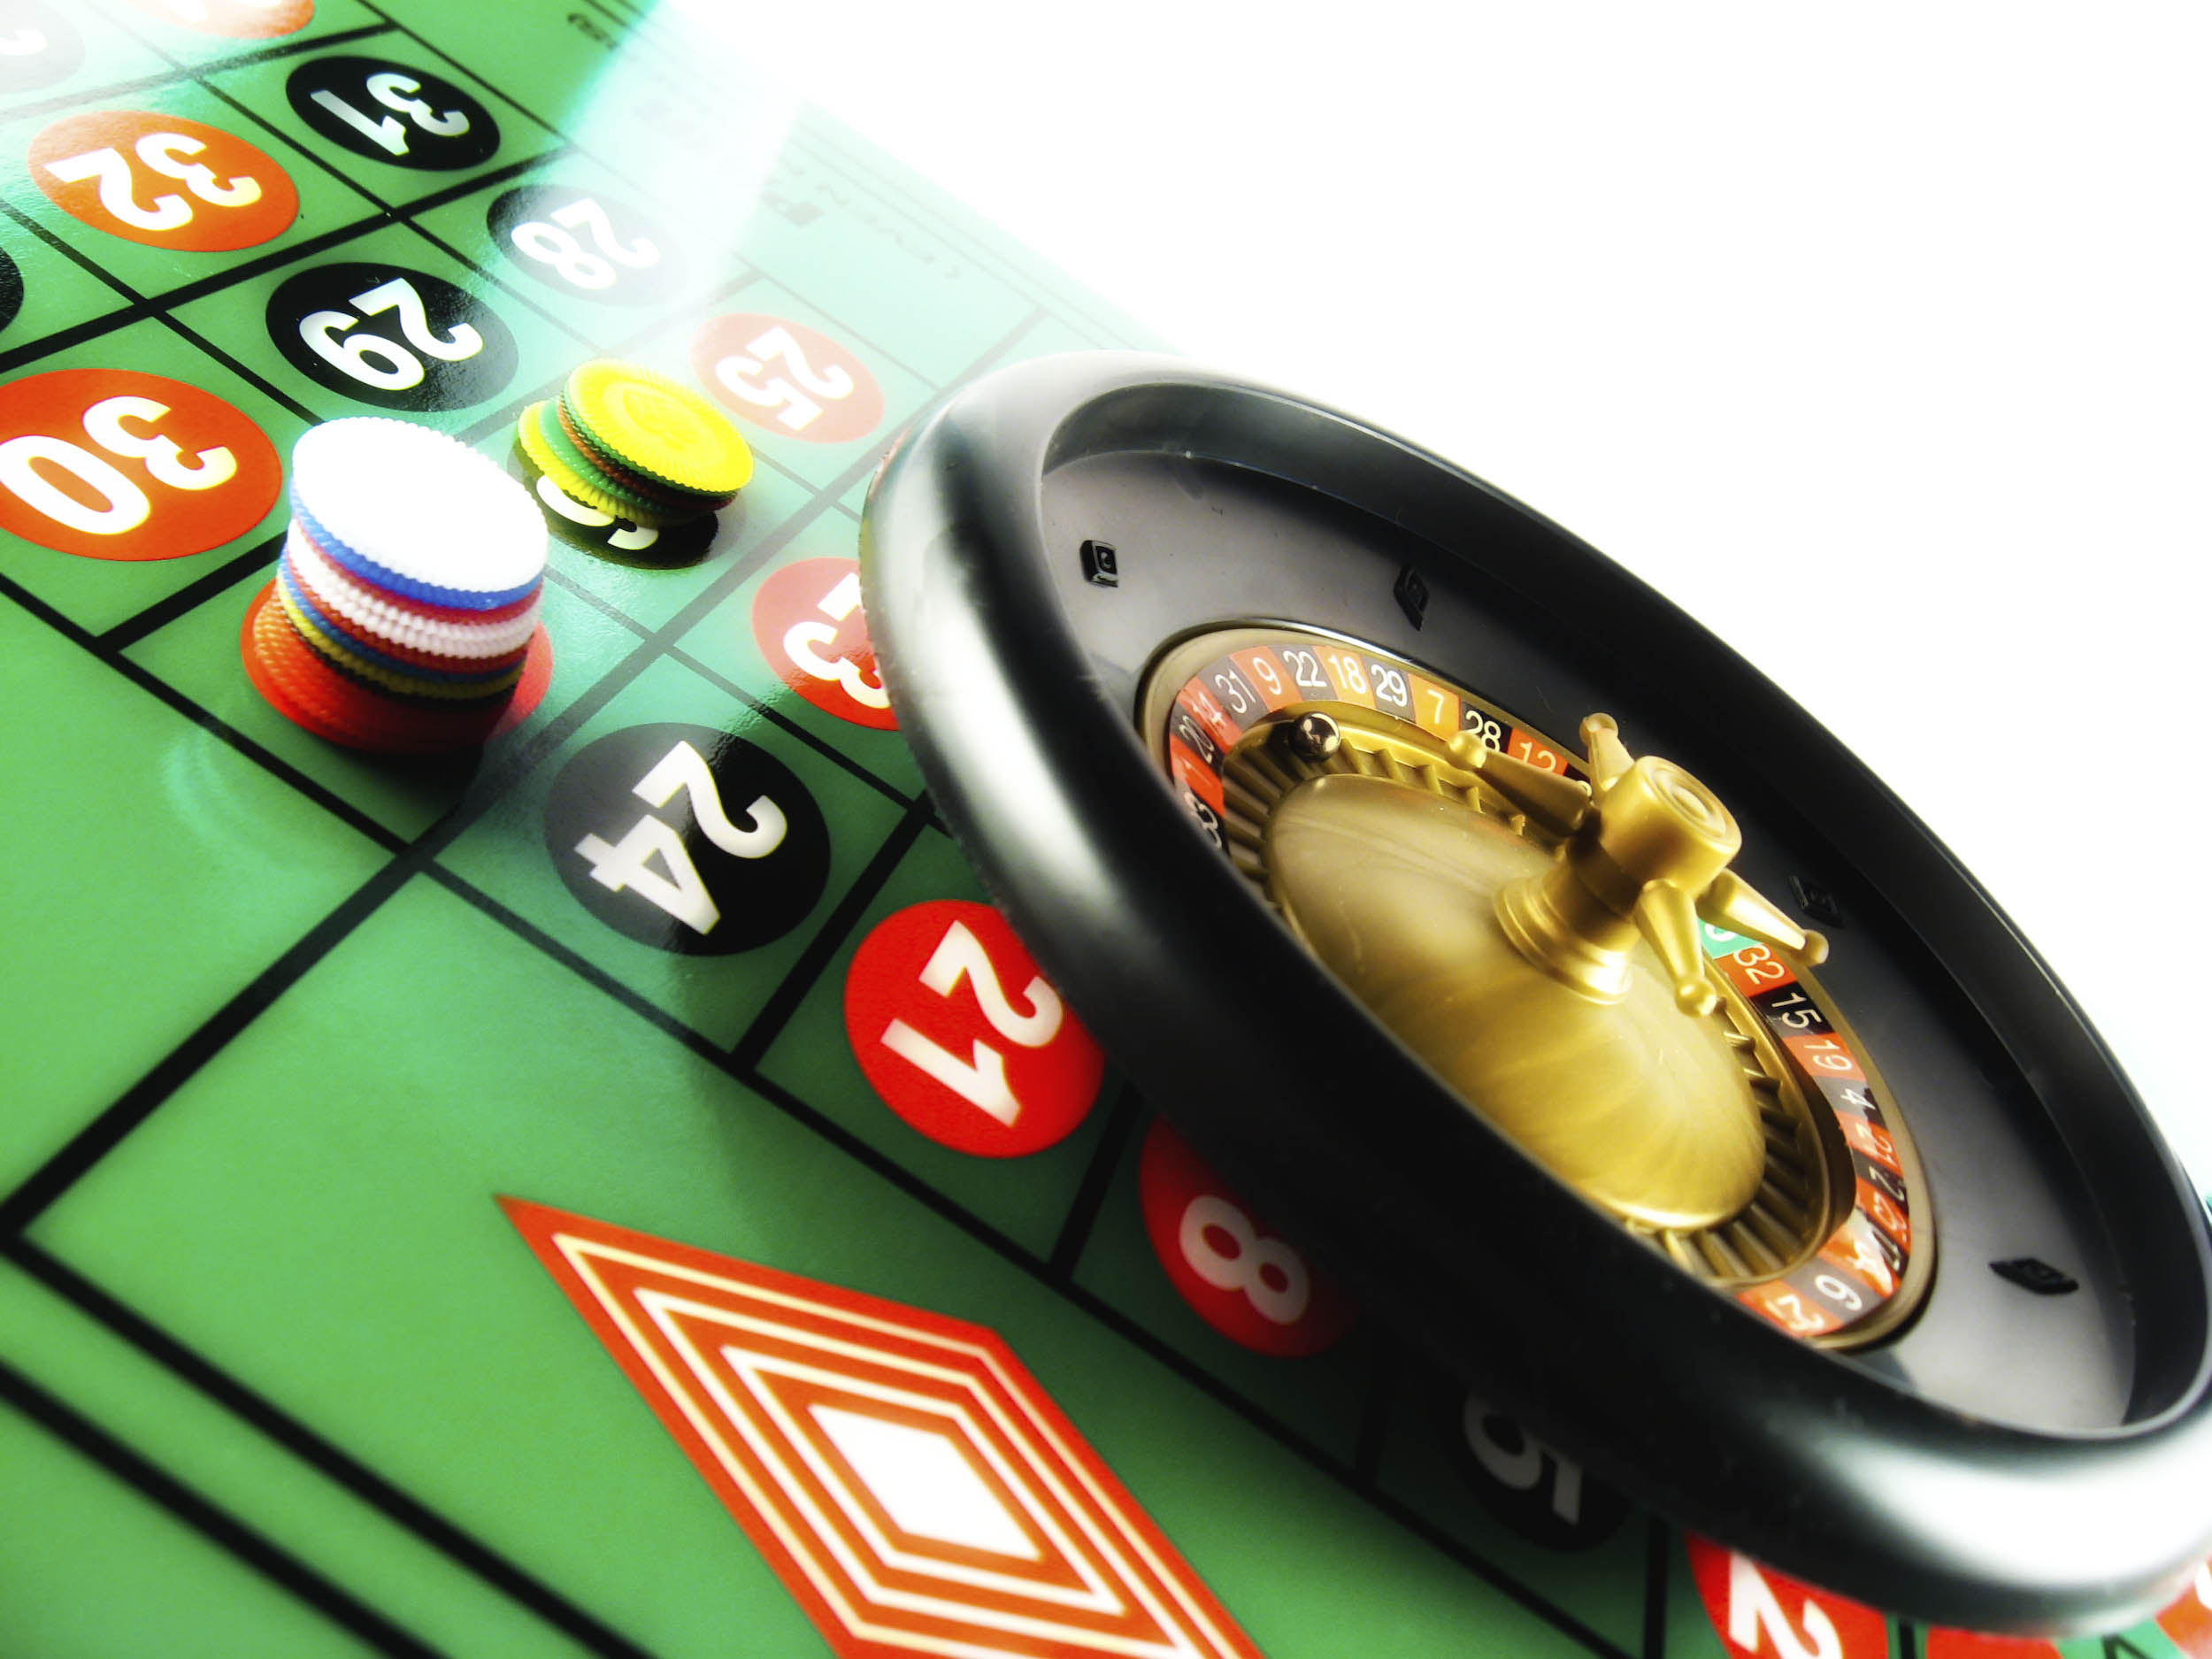 Trading vs Gambling: An interesting perspective